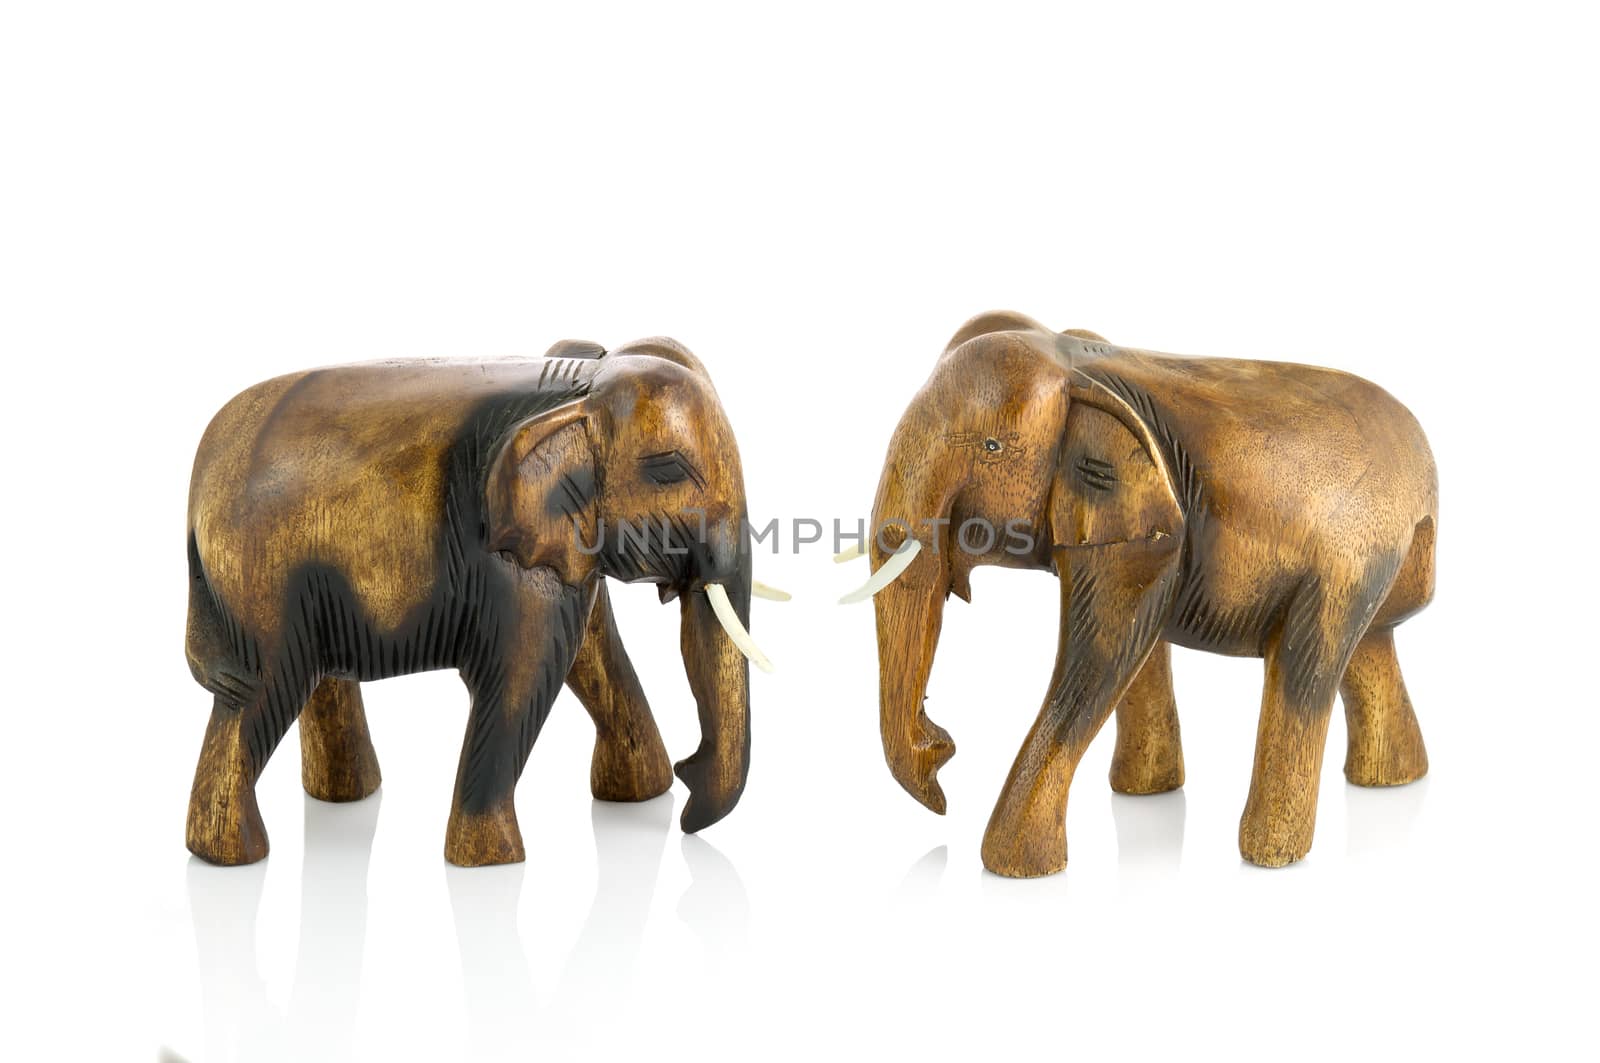 Handcraft wood elephant sculpture by seksan44